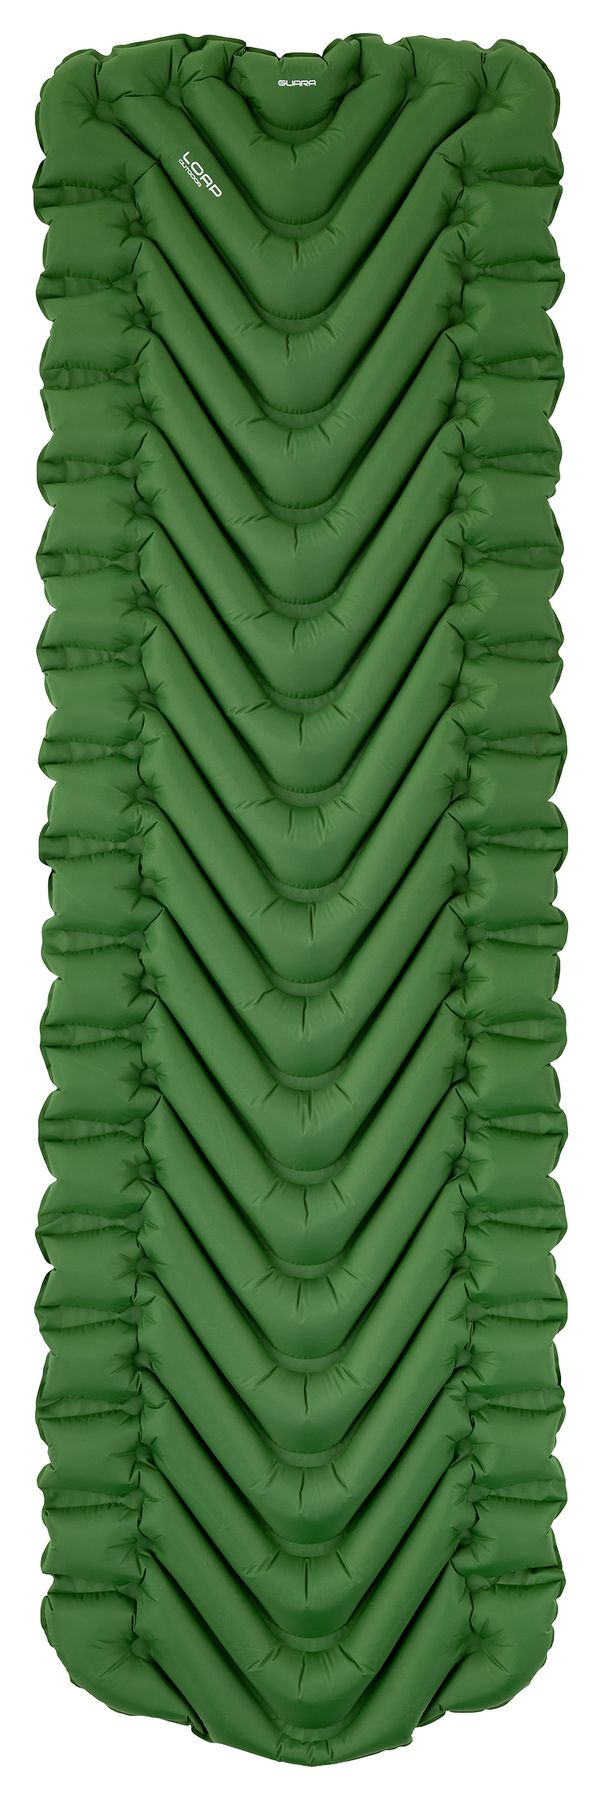 LOAP Inflatable mat LOAP GUARA Green